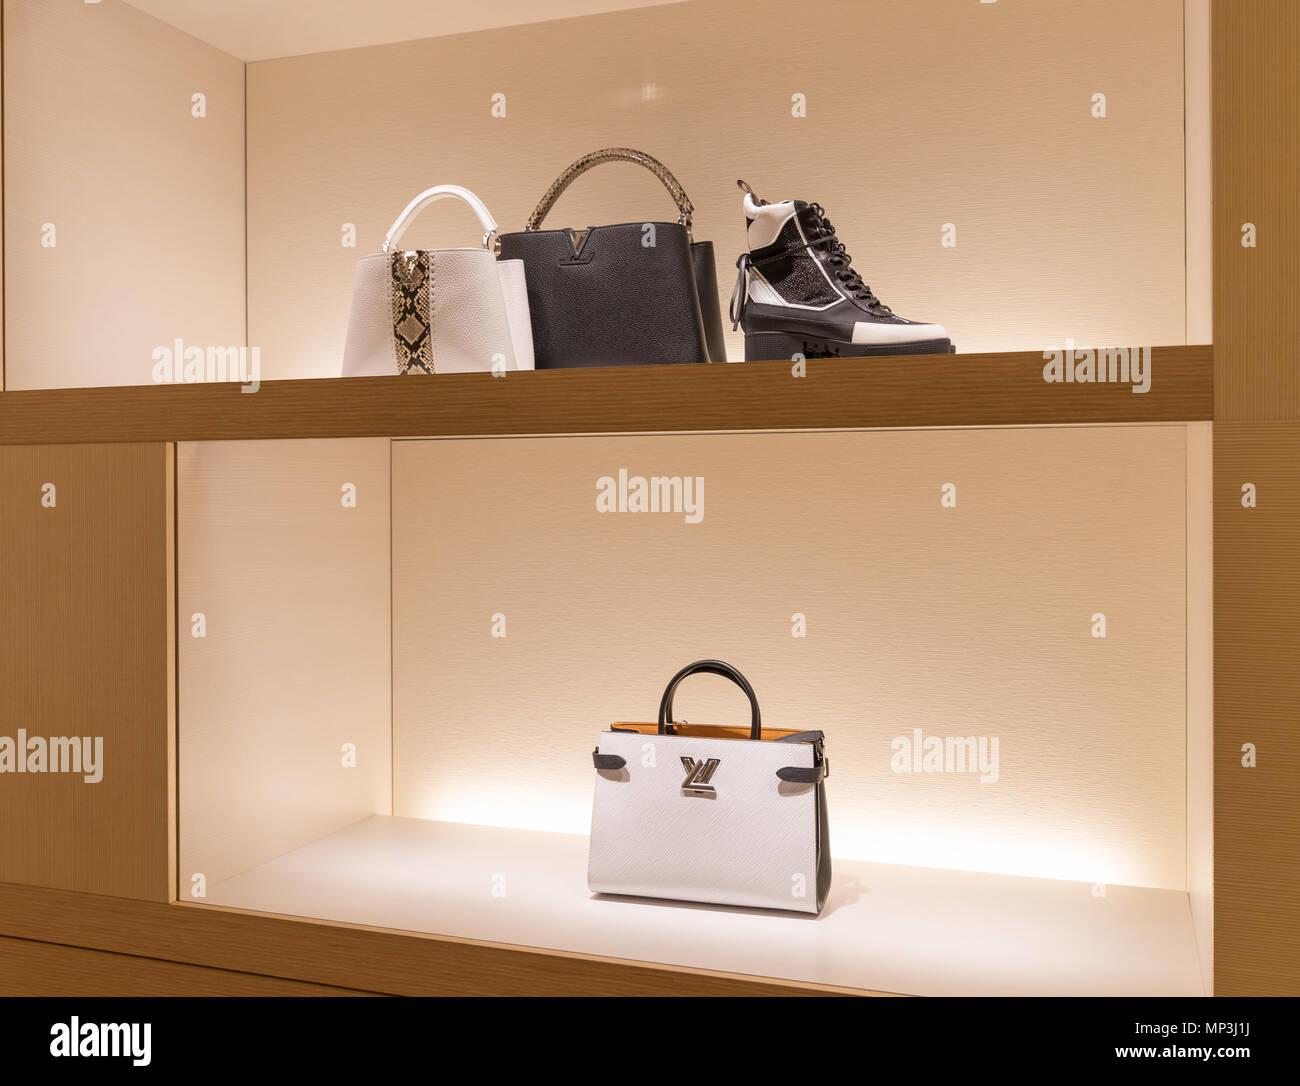 Louis Vuitton luxury fashion designer purse at store's display at